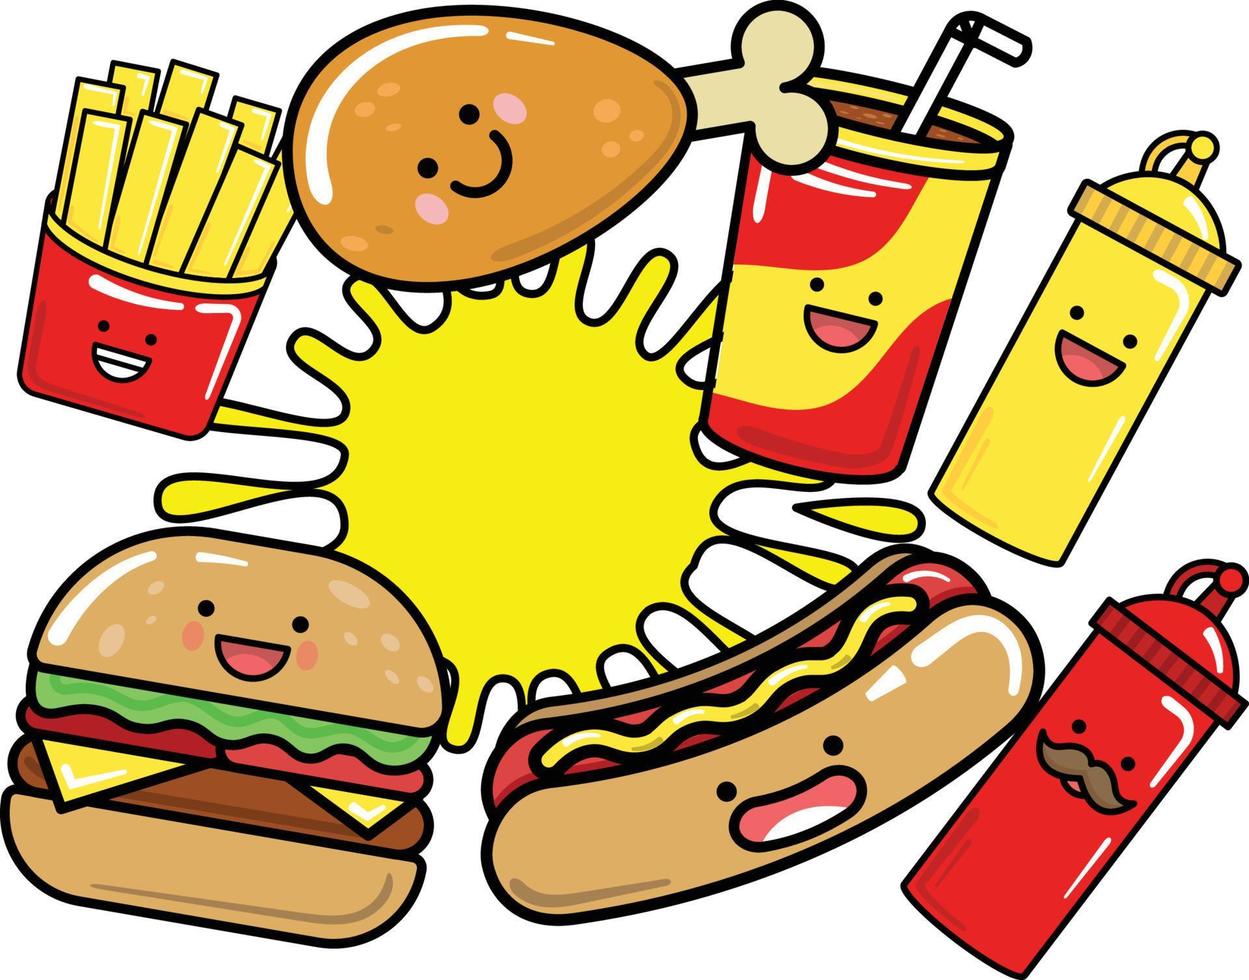 fast food take out hamburger hotdog soda chicken chips fries cartoon cute vector